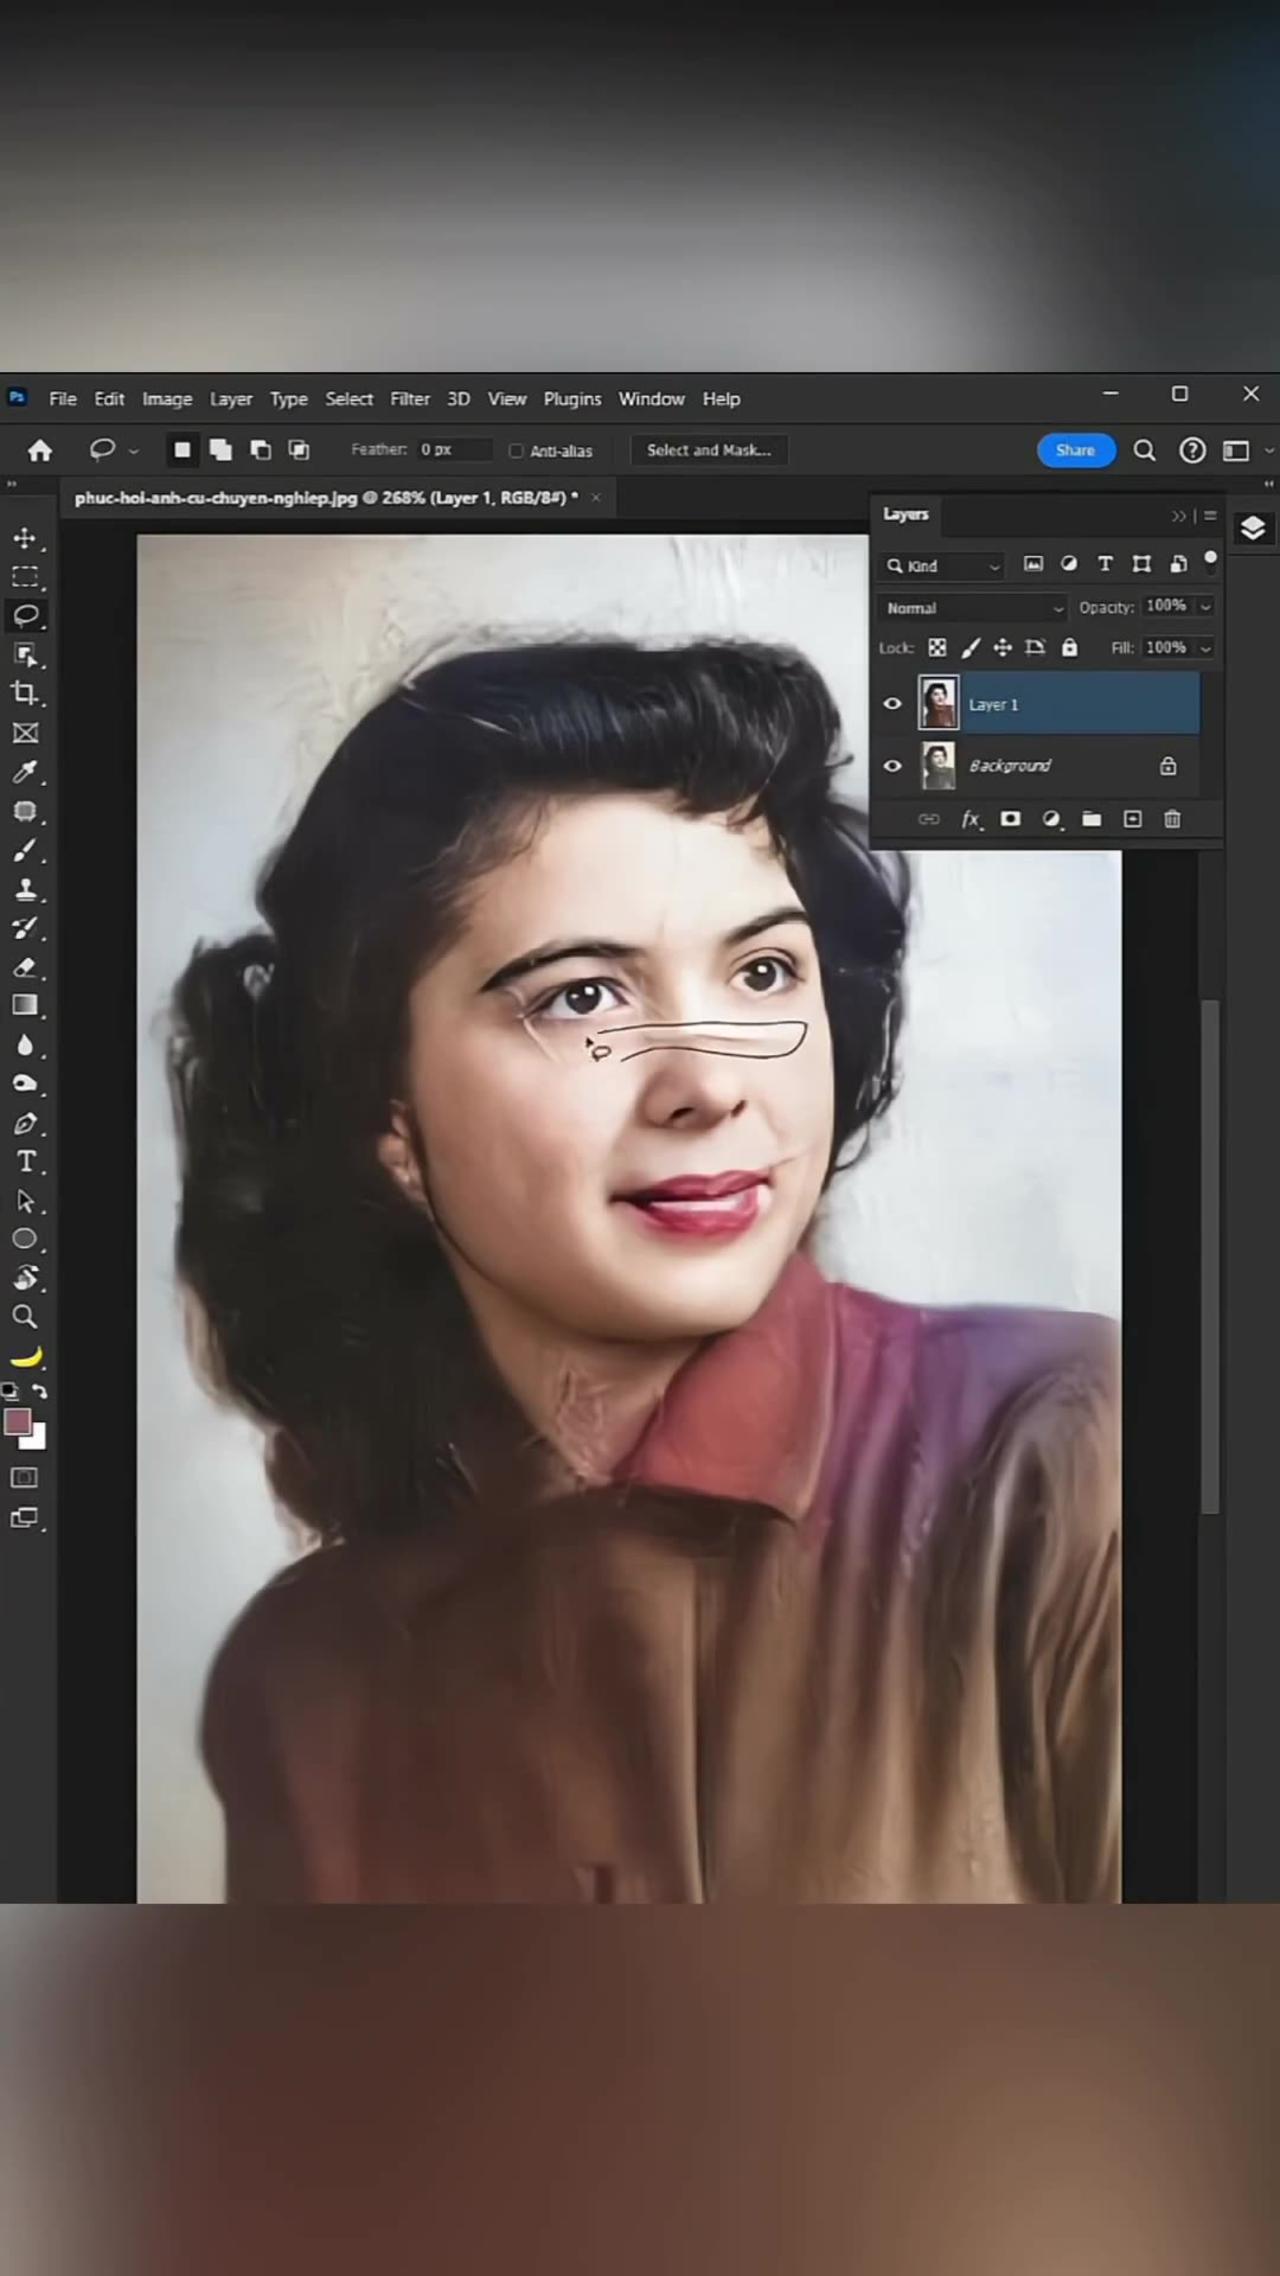 Adobe photoshop .. scratch remove tips ...